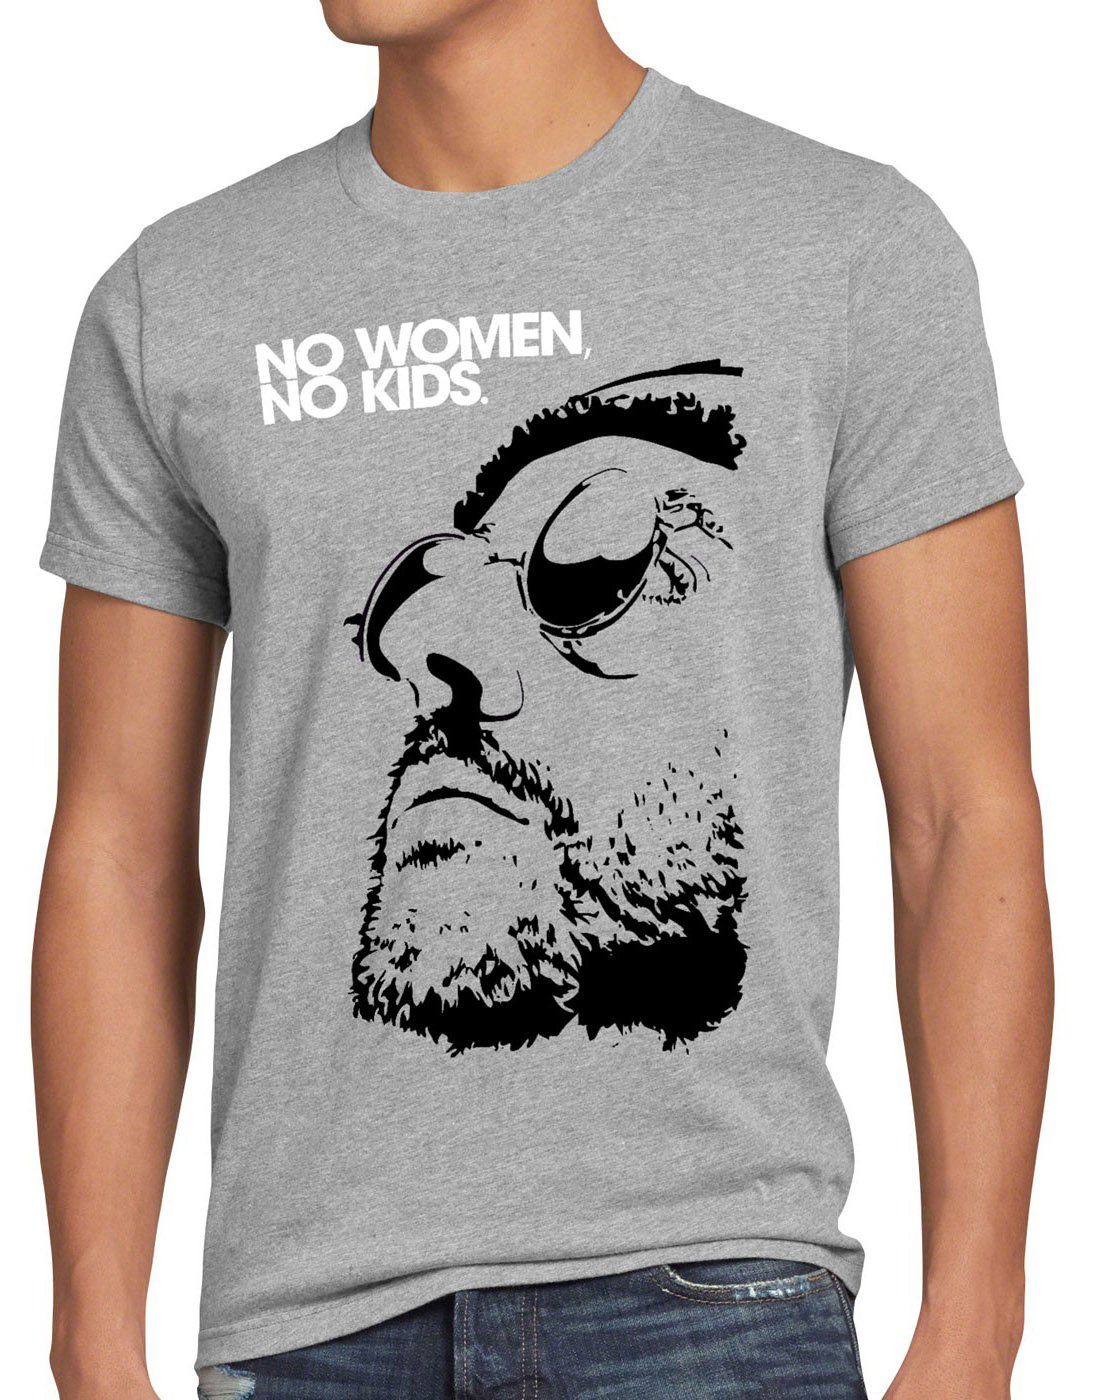 style3 Print-Shirt Herren T-Shirt No Women, No Kids leon der profi reno jean killer mafia mathilda grau meliert